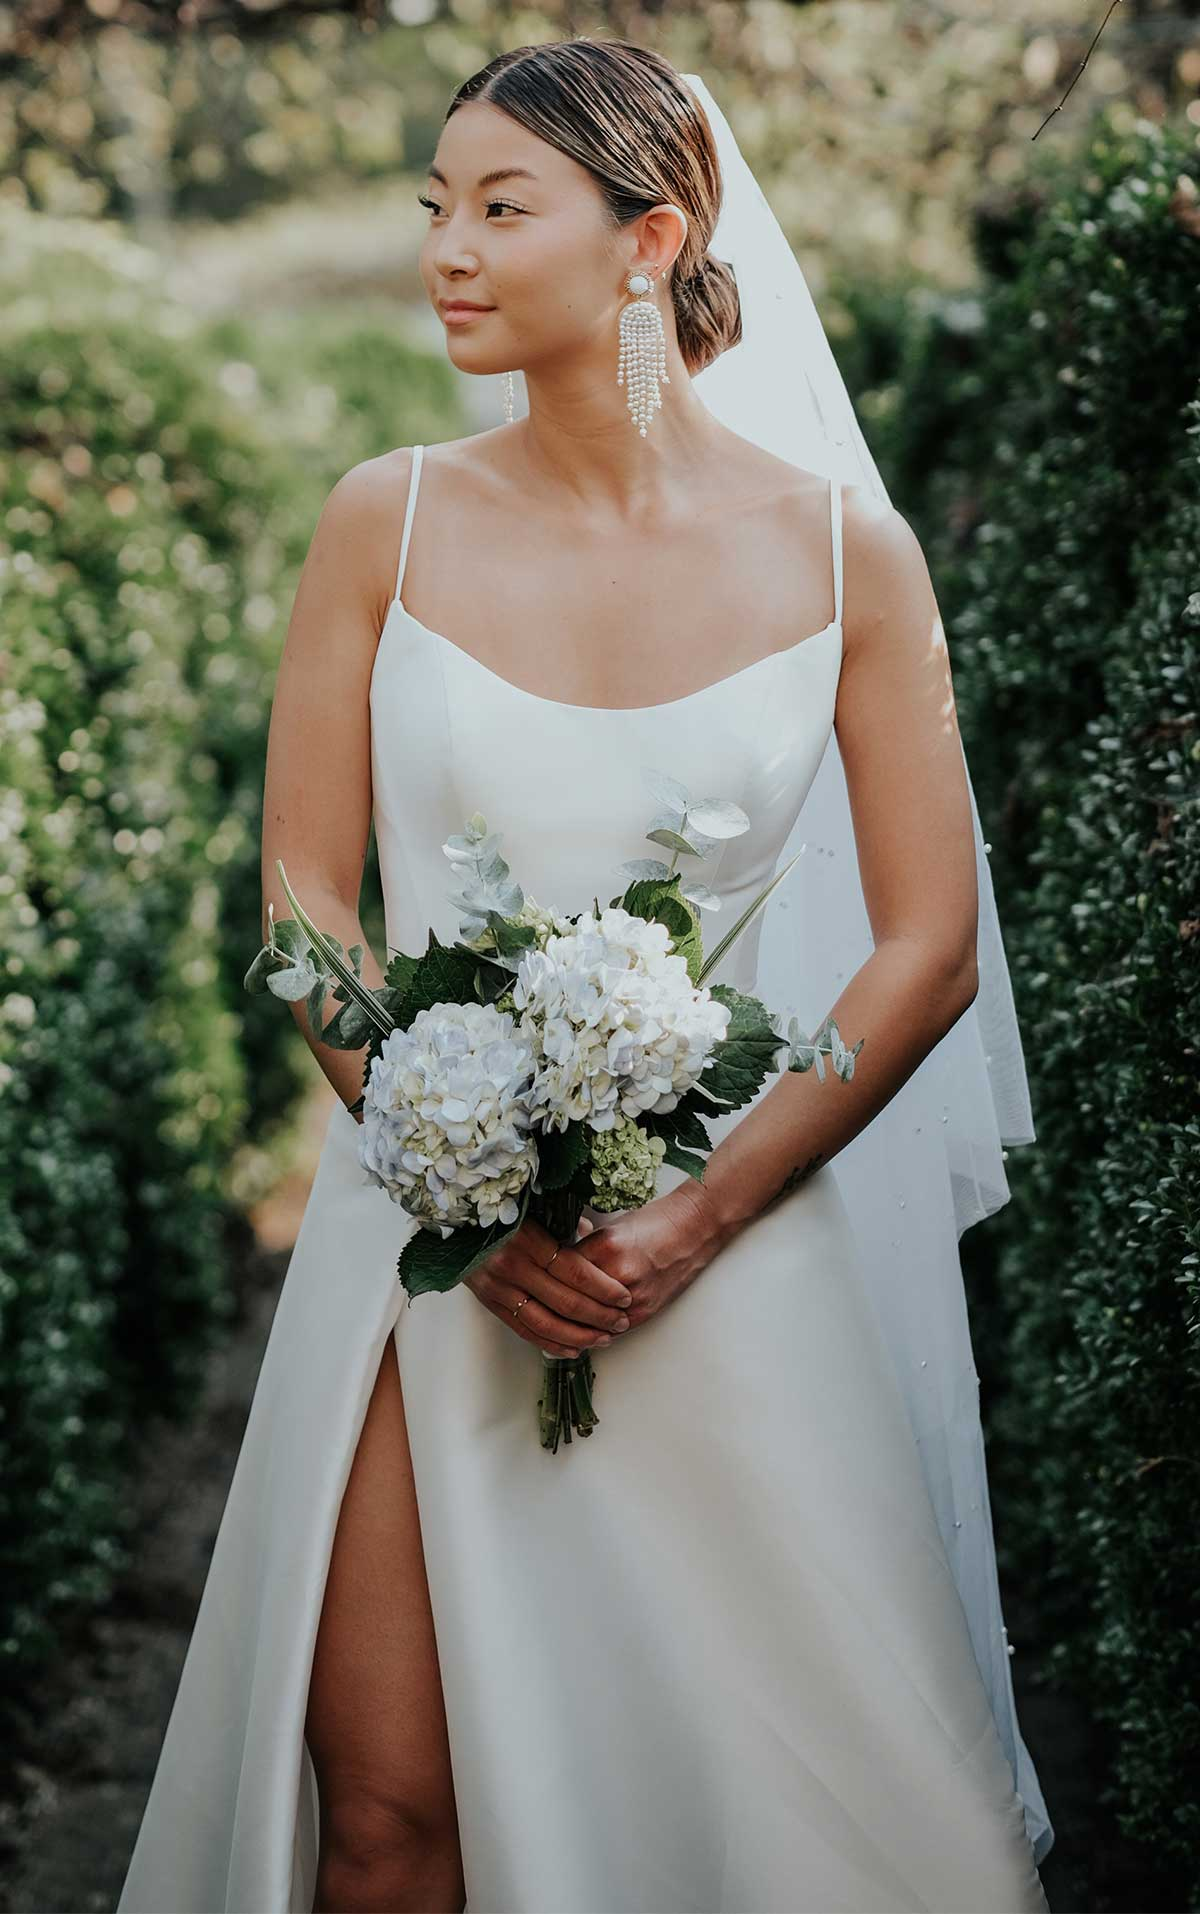 Clean, Classic Bridal Looks Image